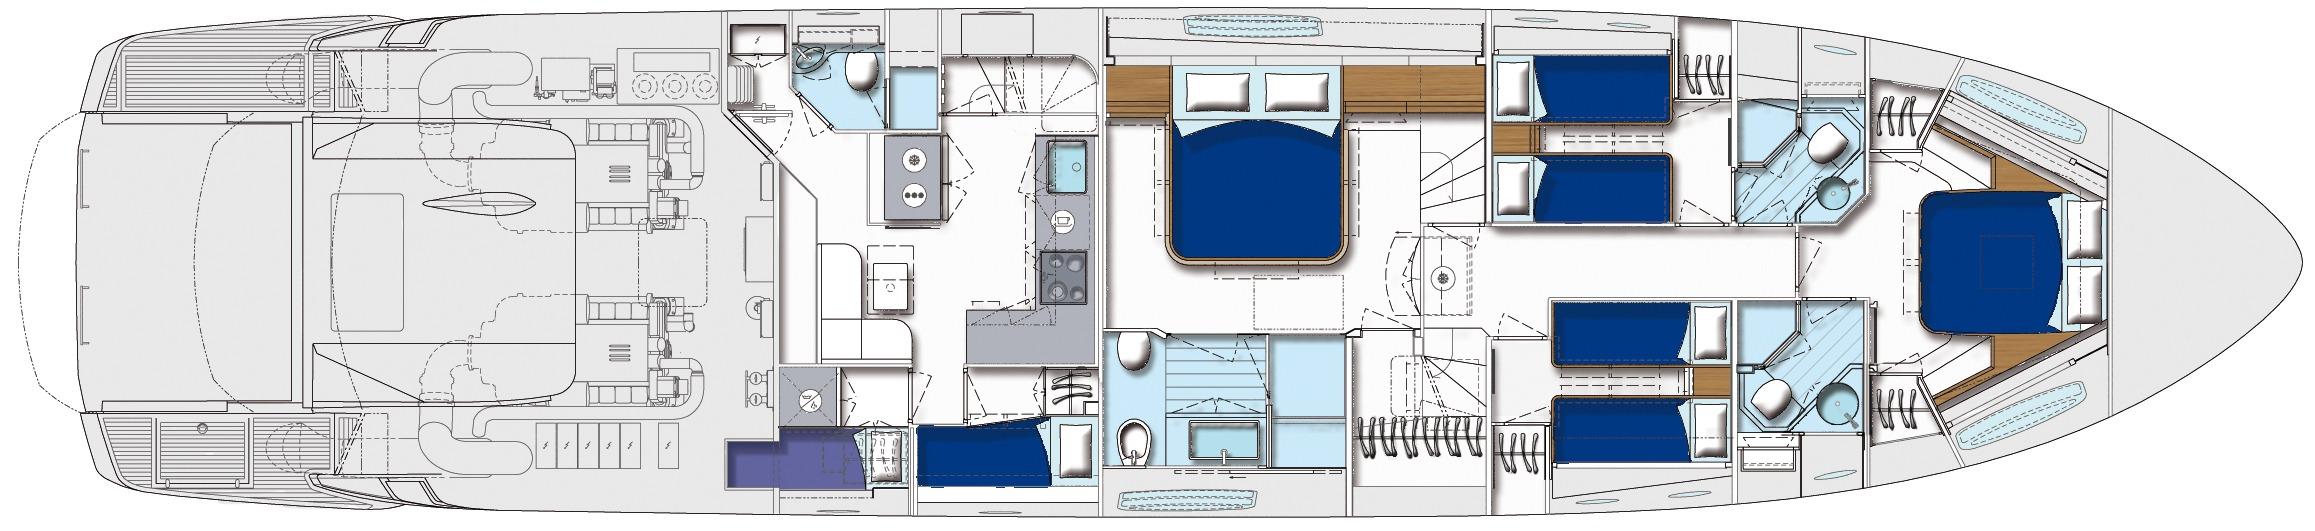 Manufacturer Provided Image: Pershing 82 Lower Deck Layout Plan